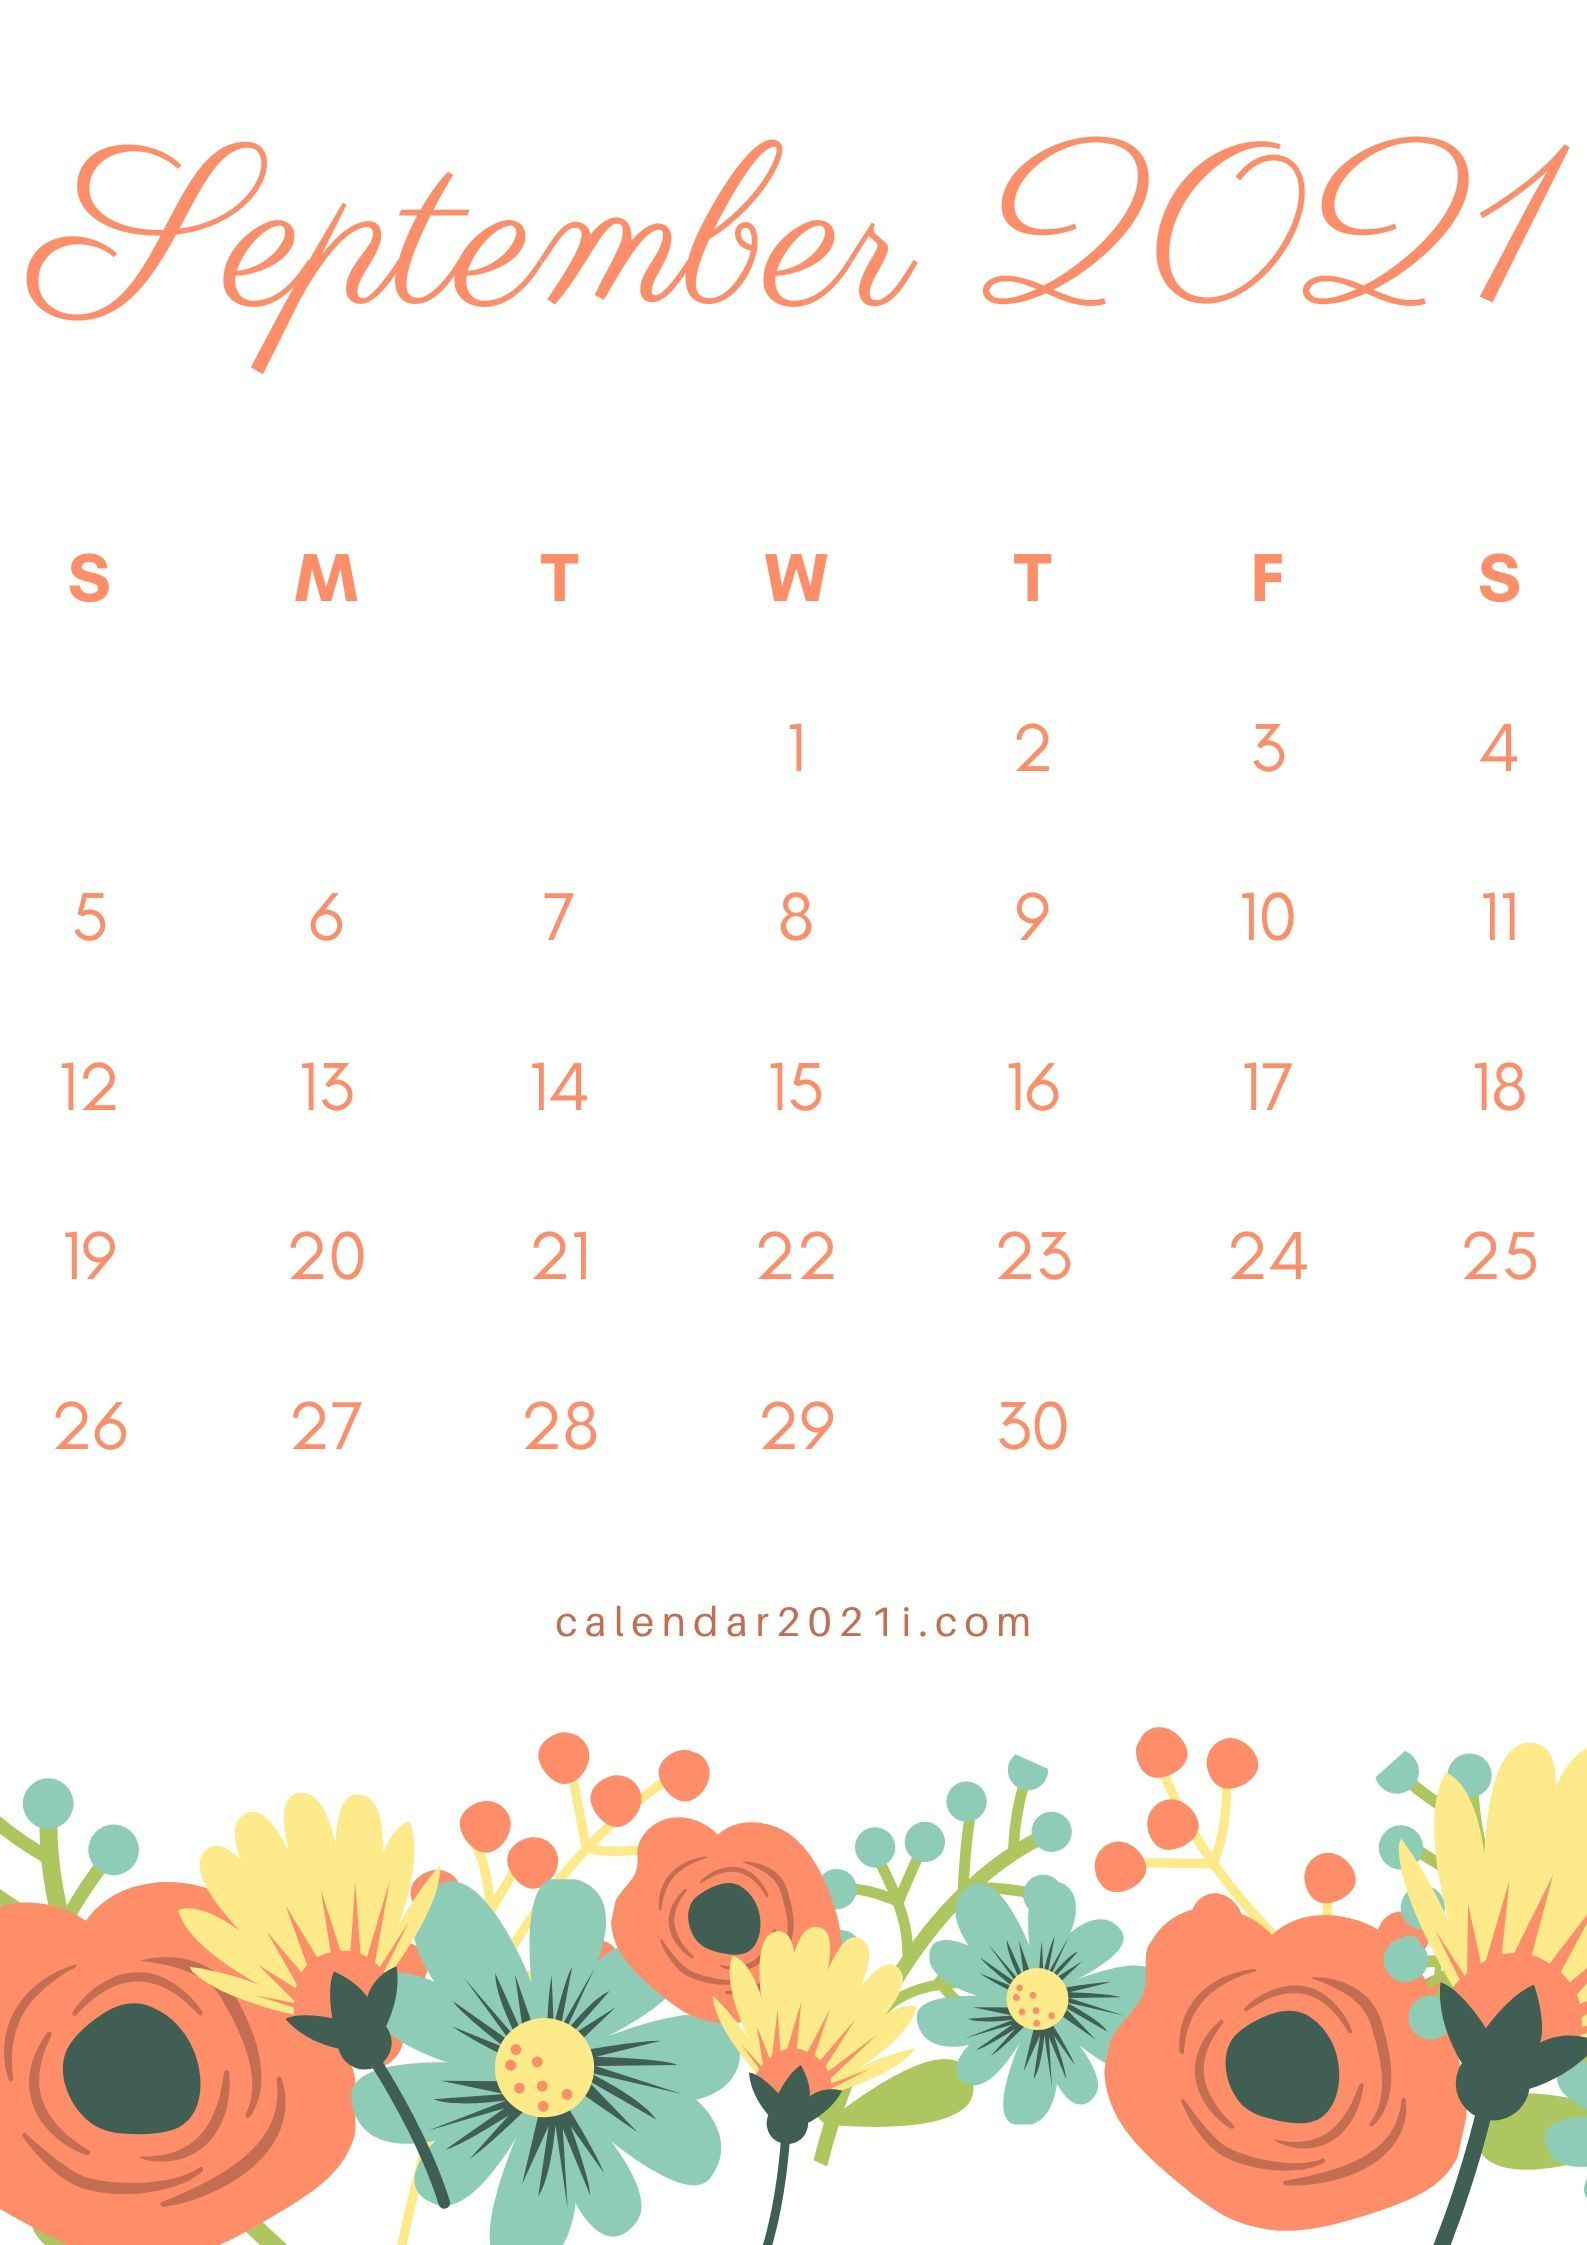 September 2021 Floral Calendar Printable Design Template December 2021 Calendar Wallpaper